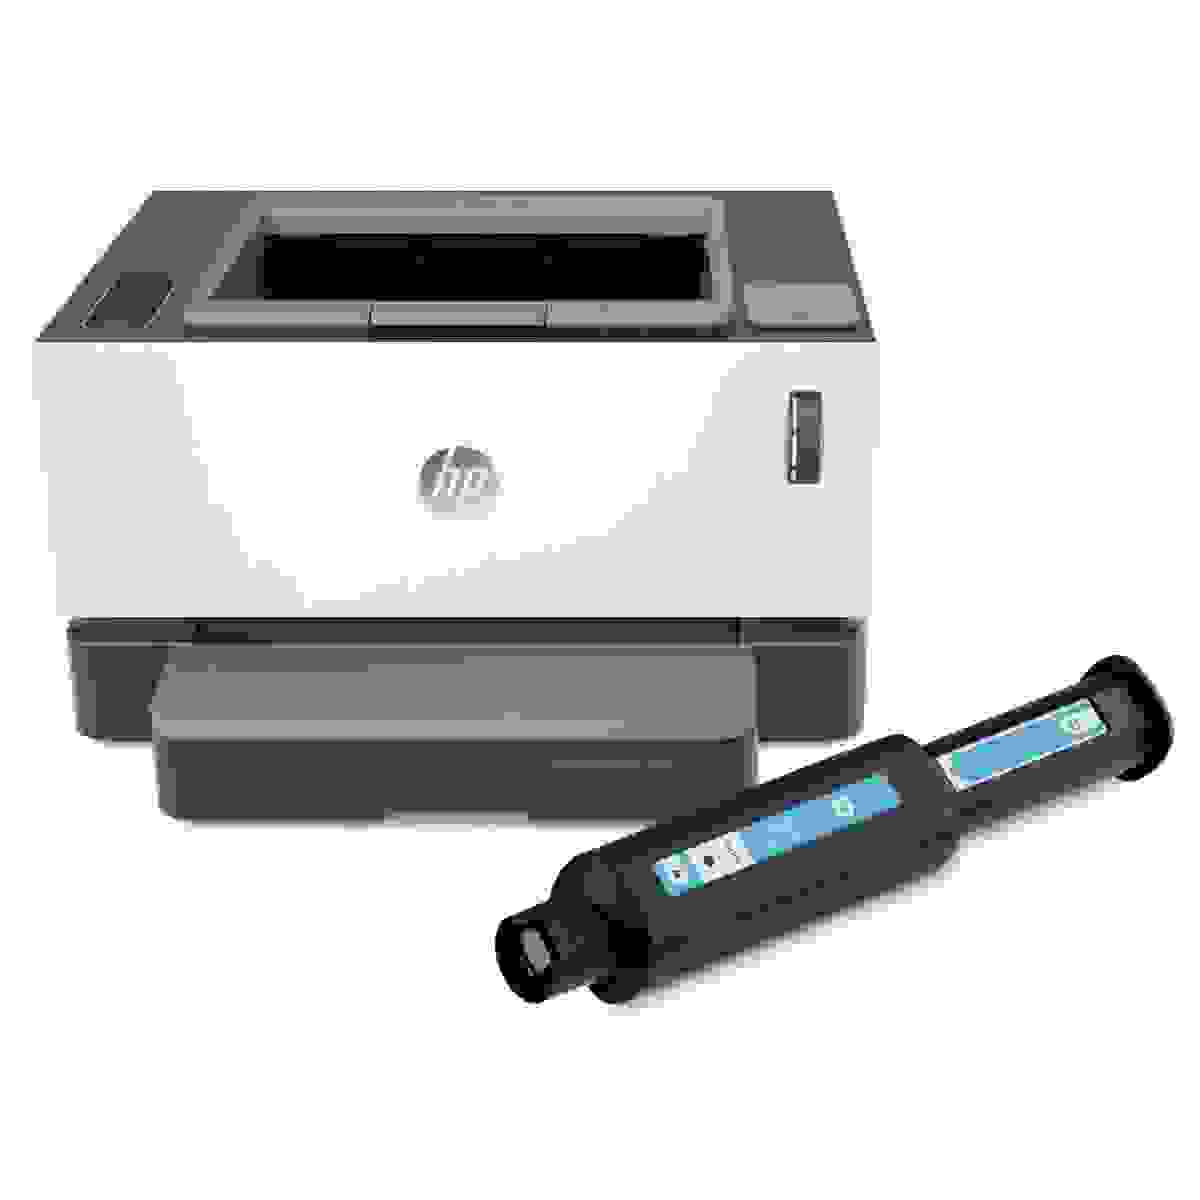 Driver hp laserjet m1136 scan Windows 8.1 download